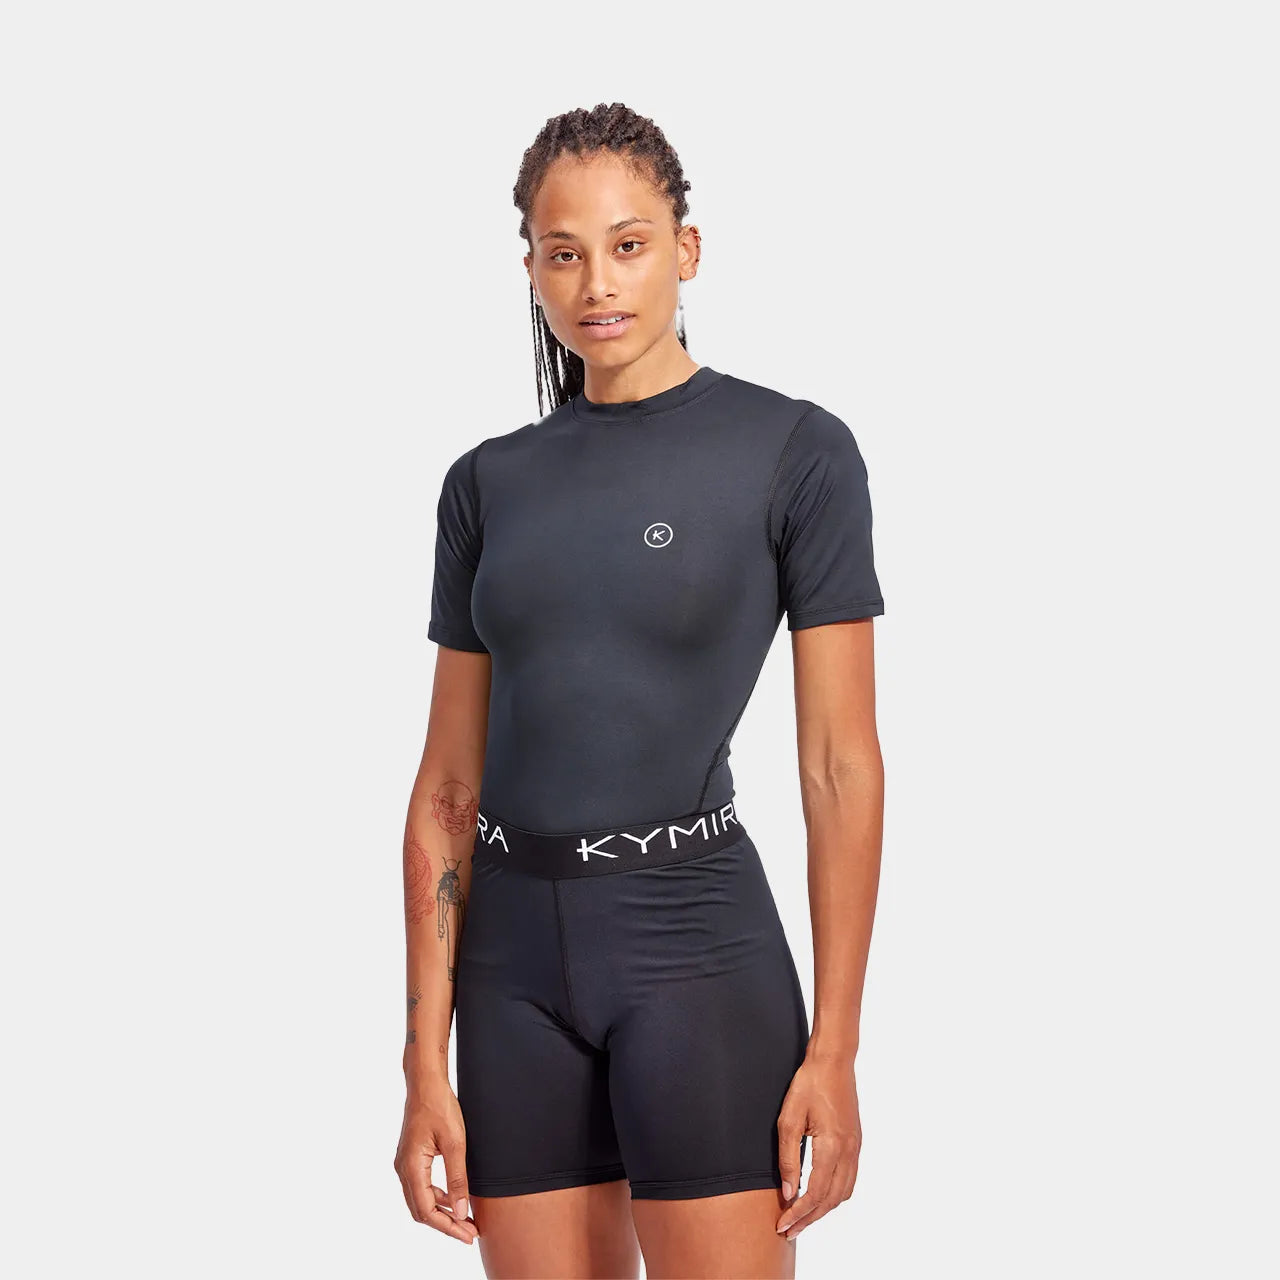 KYMIRA CHARGE IR50 Infrared Women's Short Sleeve Top